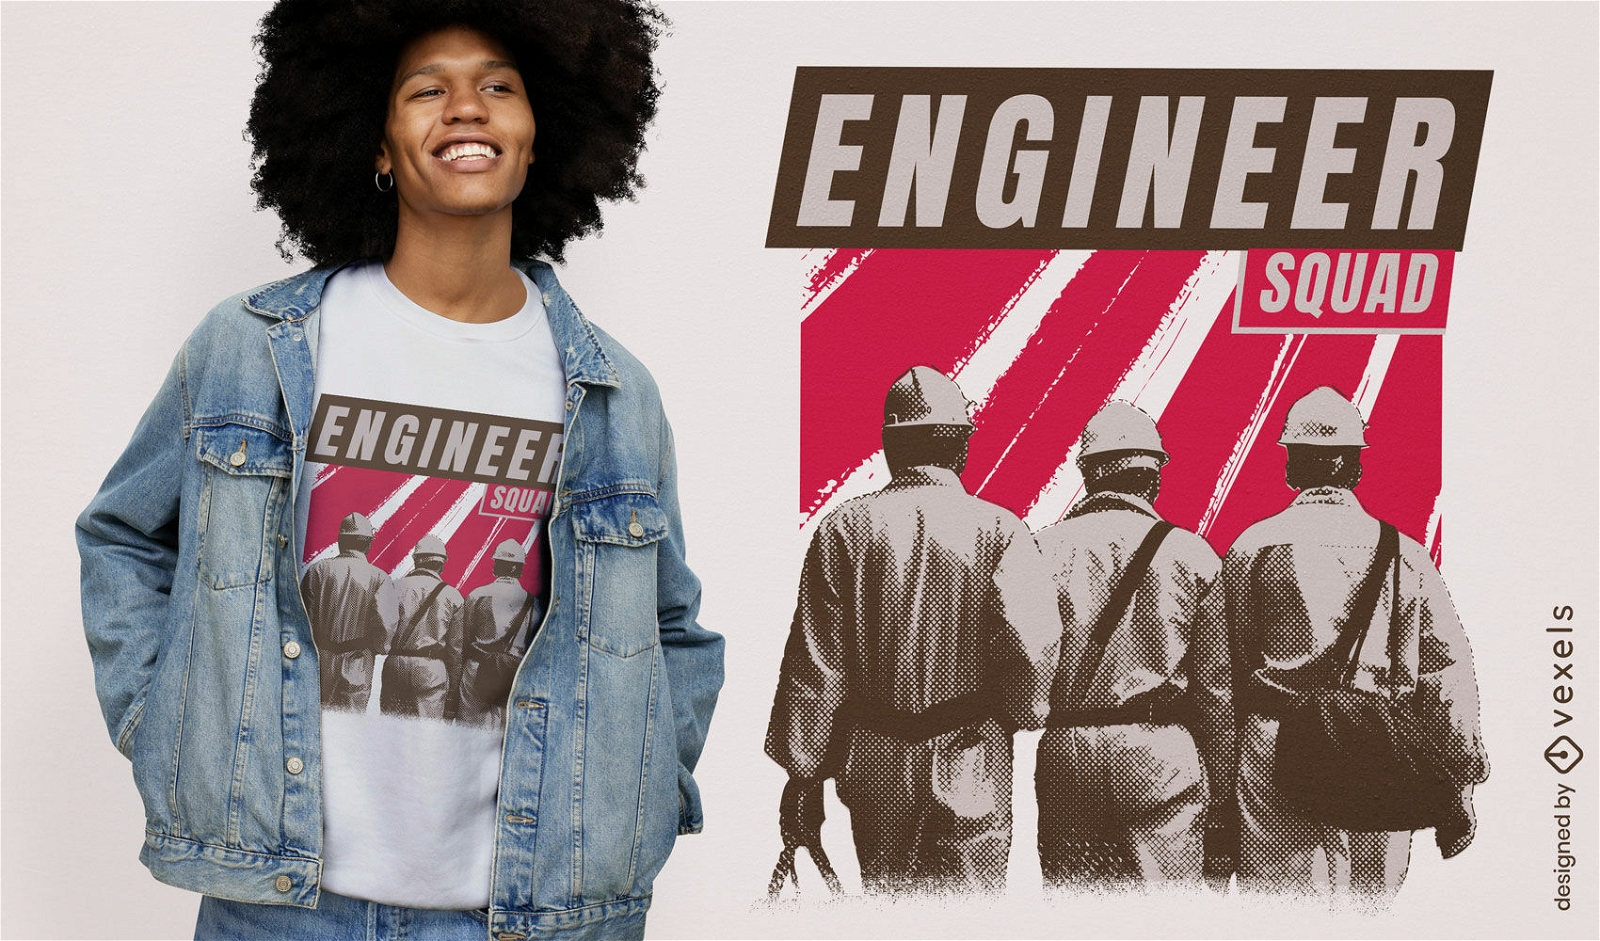 Engineer squad photographic t-shirt psd